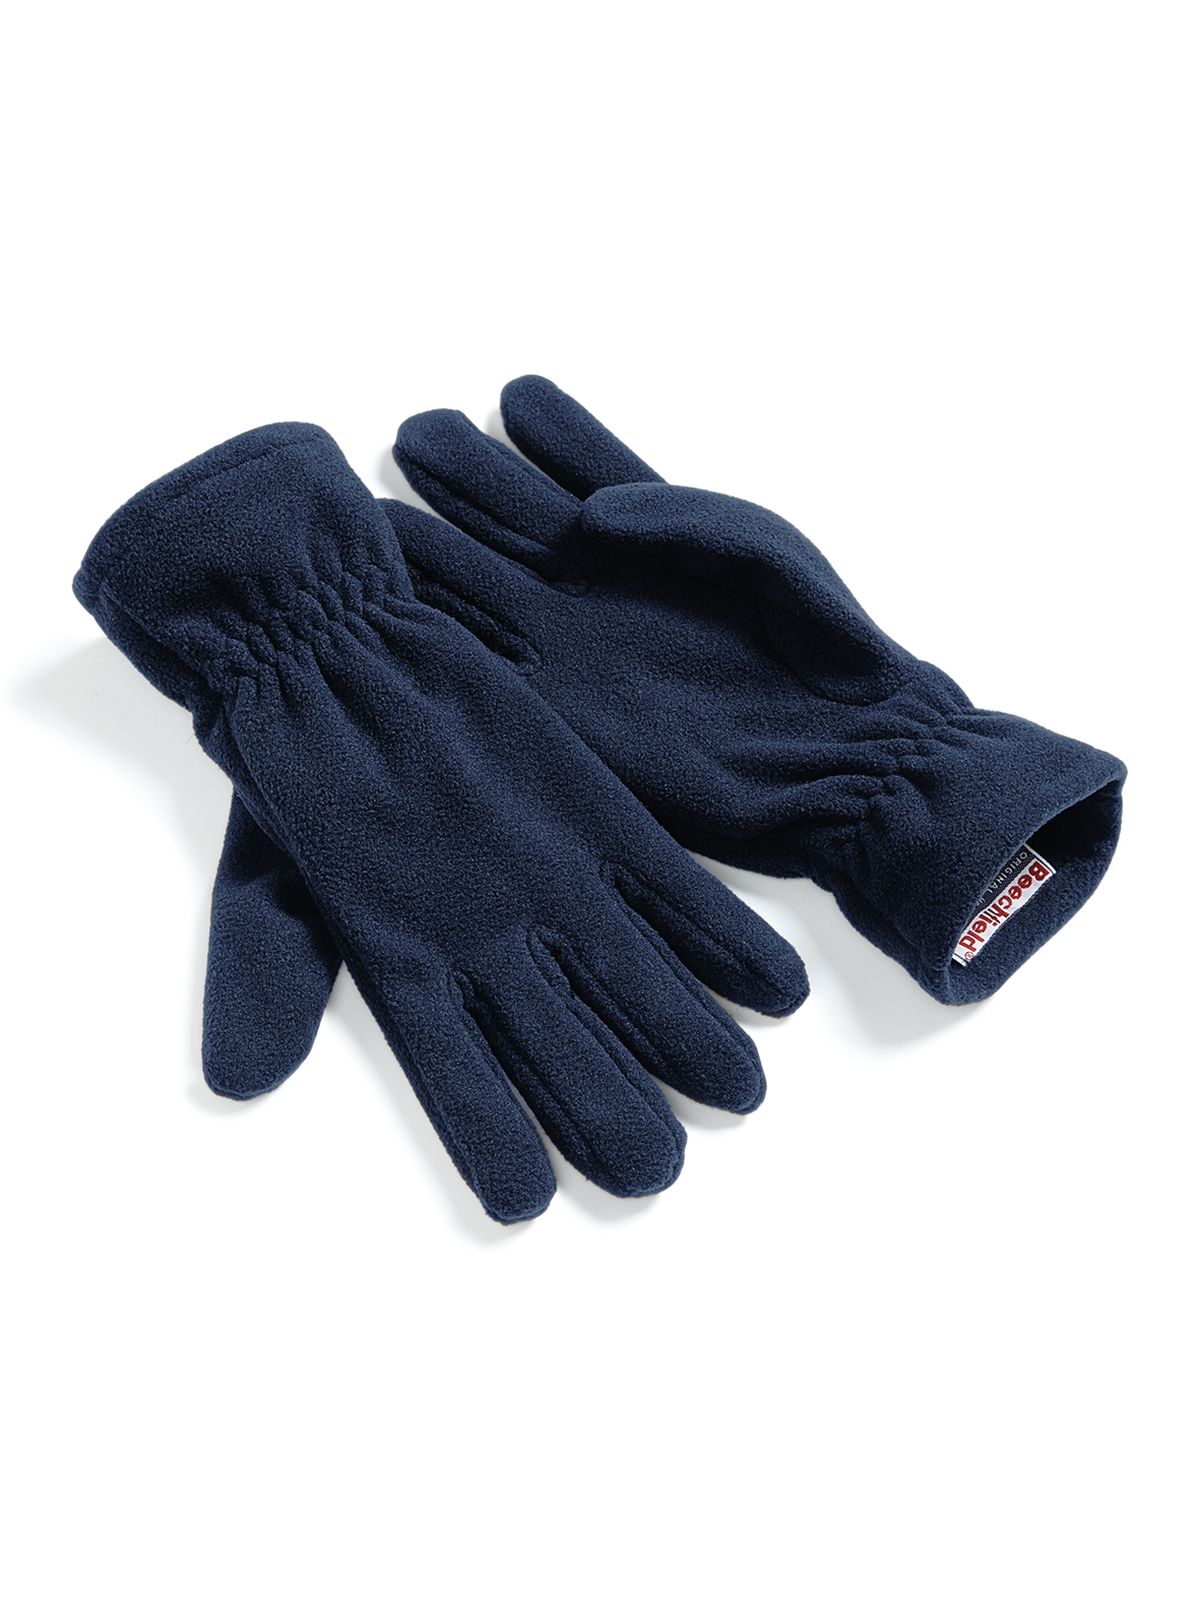 suprafleece-alpine-gloves-french-navy.webp